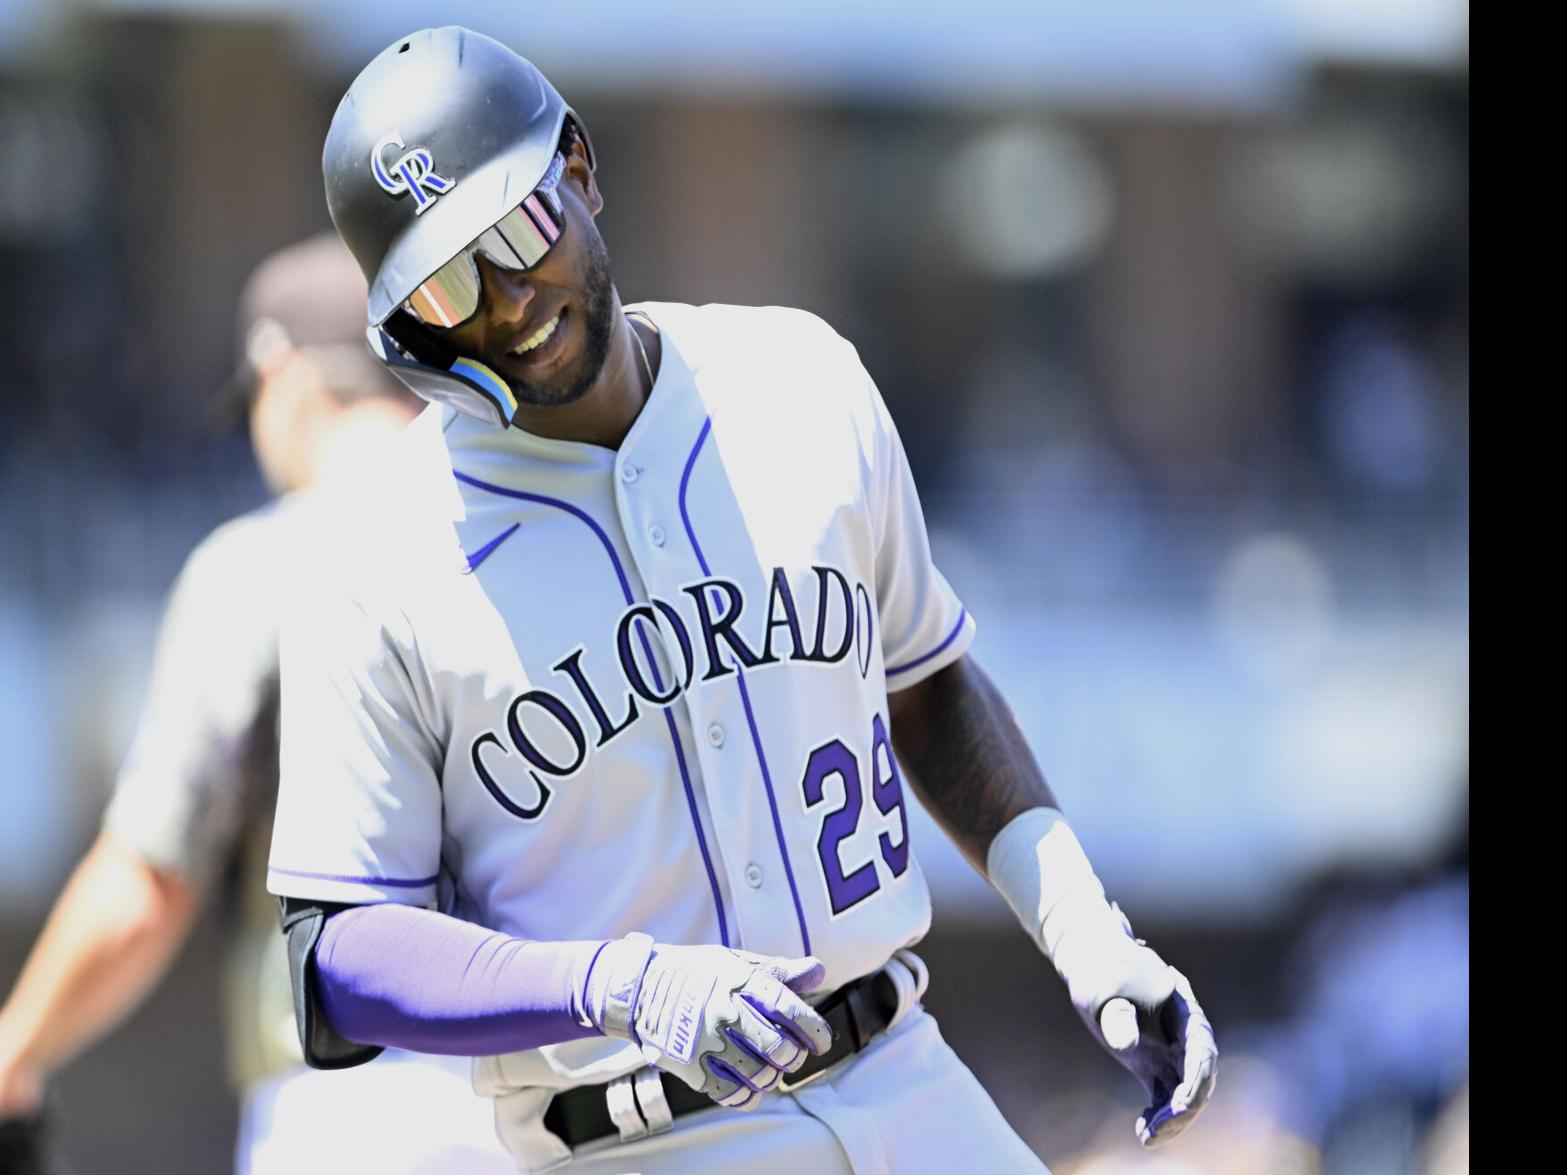 MLB Rumors: Jurickson Profar to Colorado Rockies, per reports